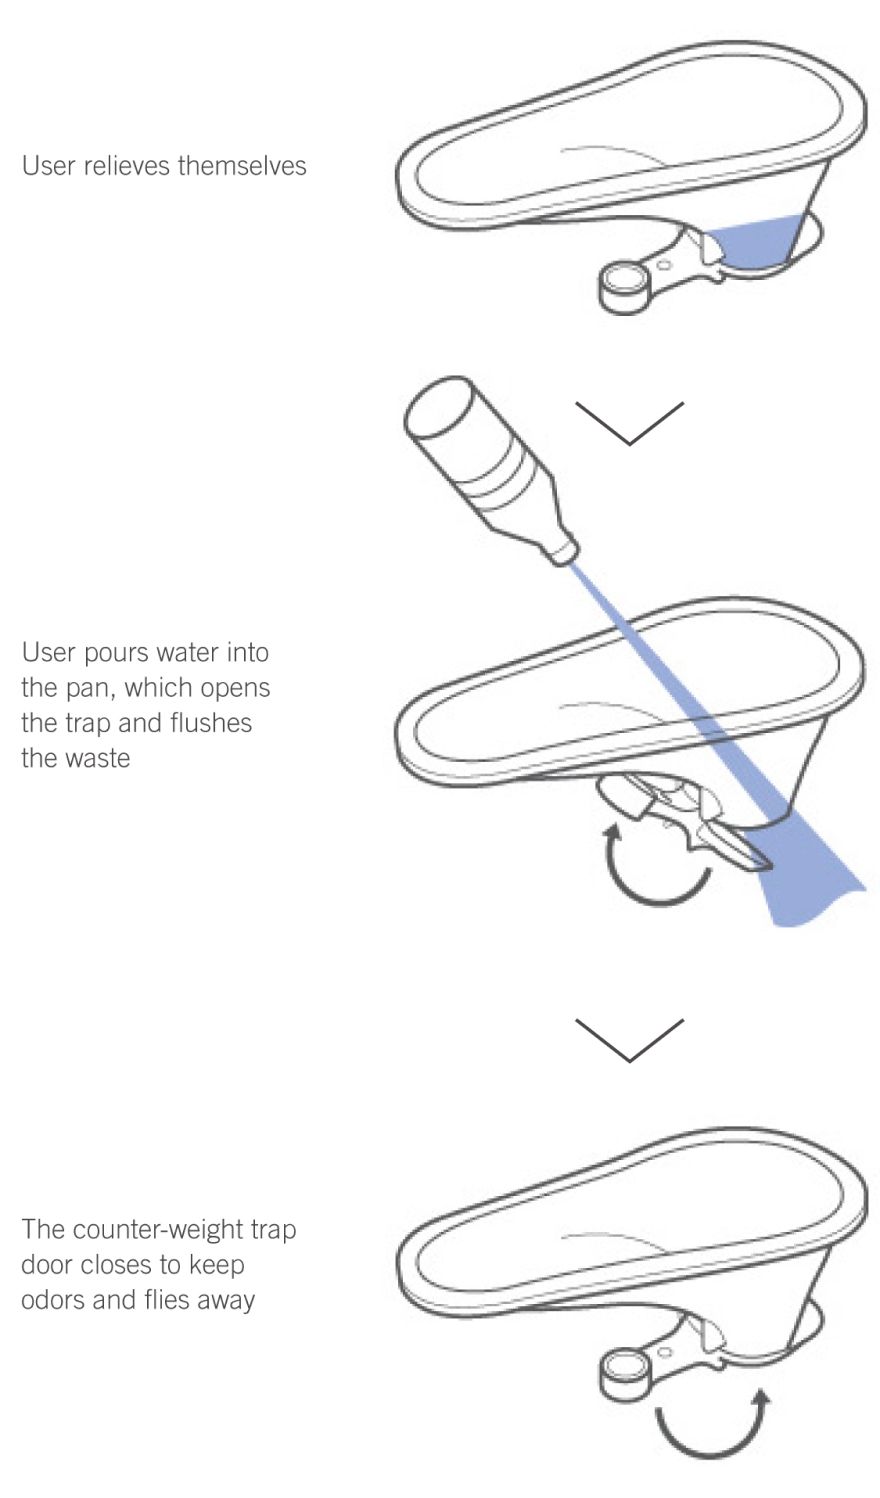 How SATO toilets work